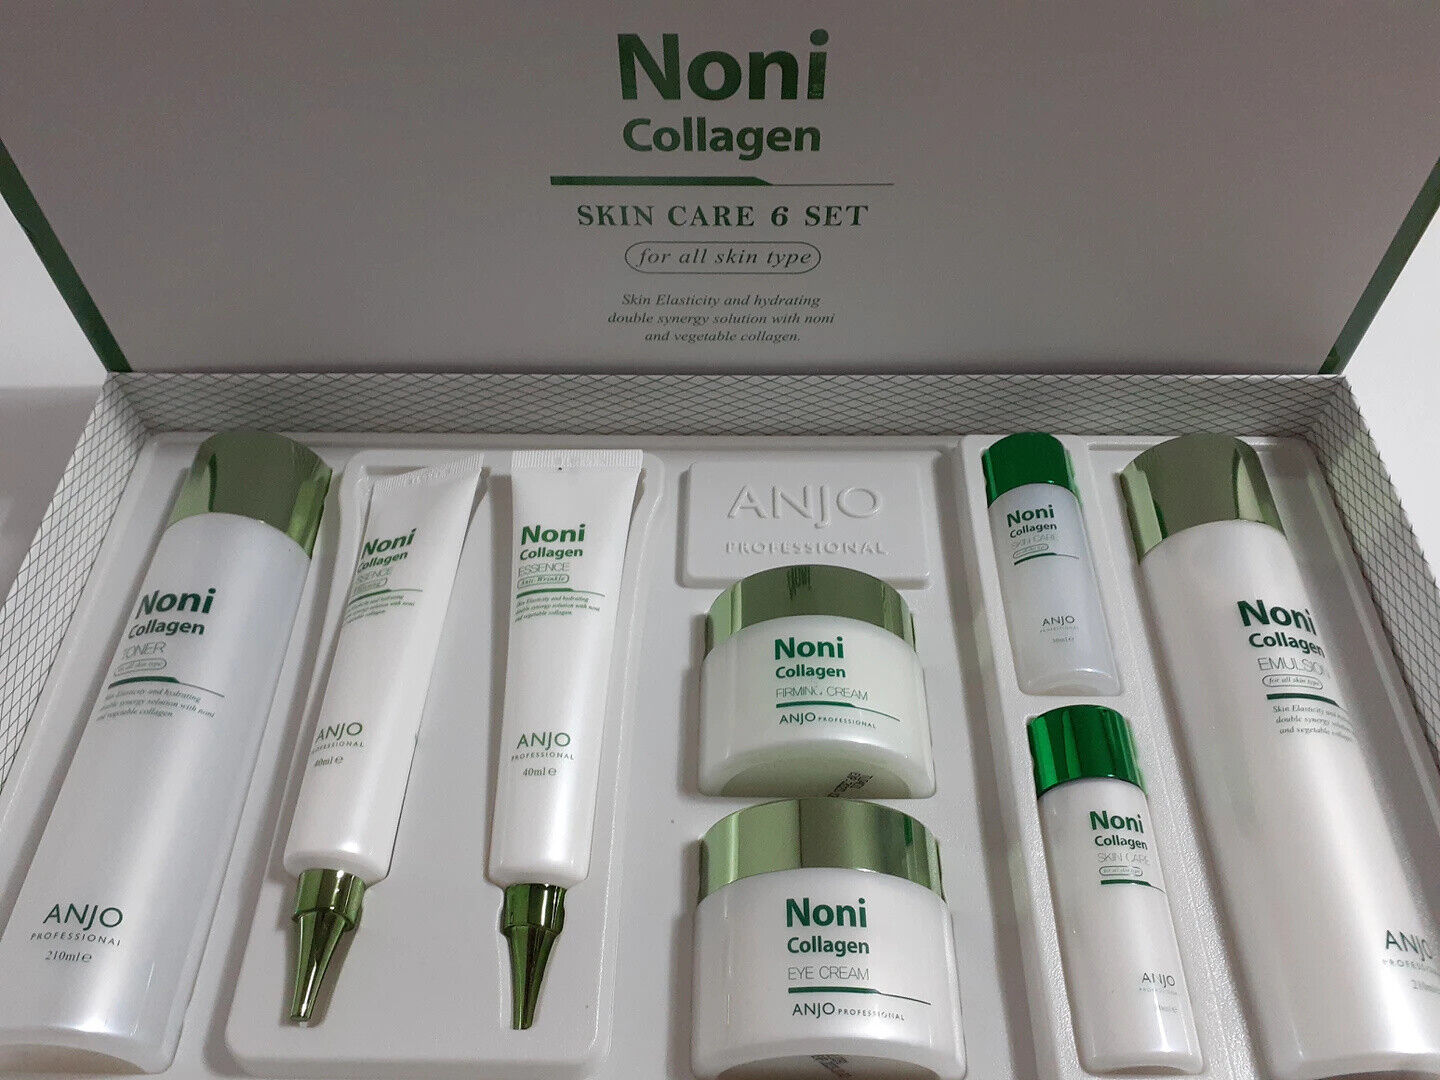 Anjo Noni Collagen 6pcs Special Skin care Set Anti Aging Wrinkle care Elastic anti-oxidant facial Soothing Nutrition skin care Korea Cosmetics face cream lotion toner